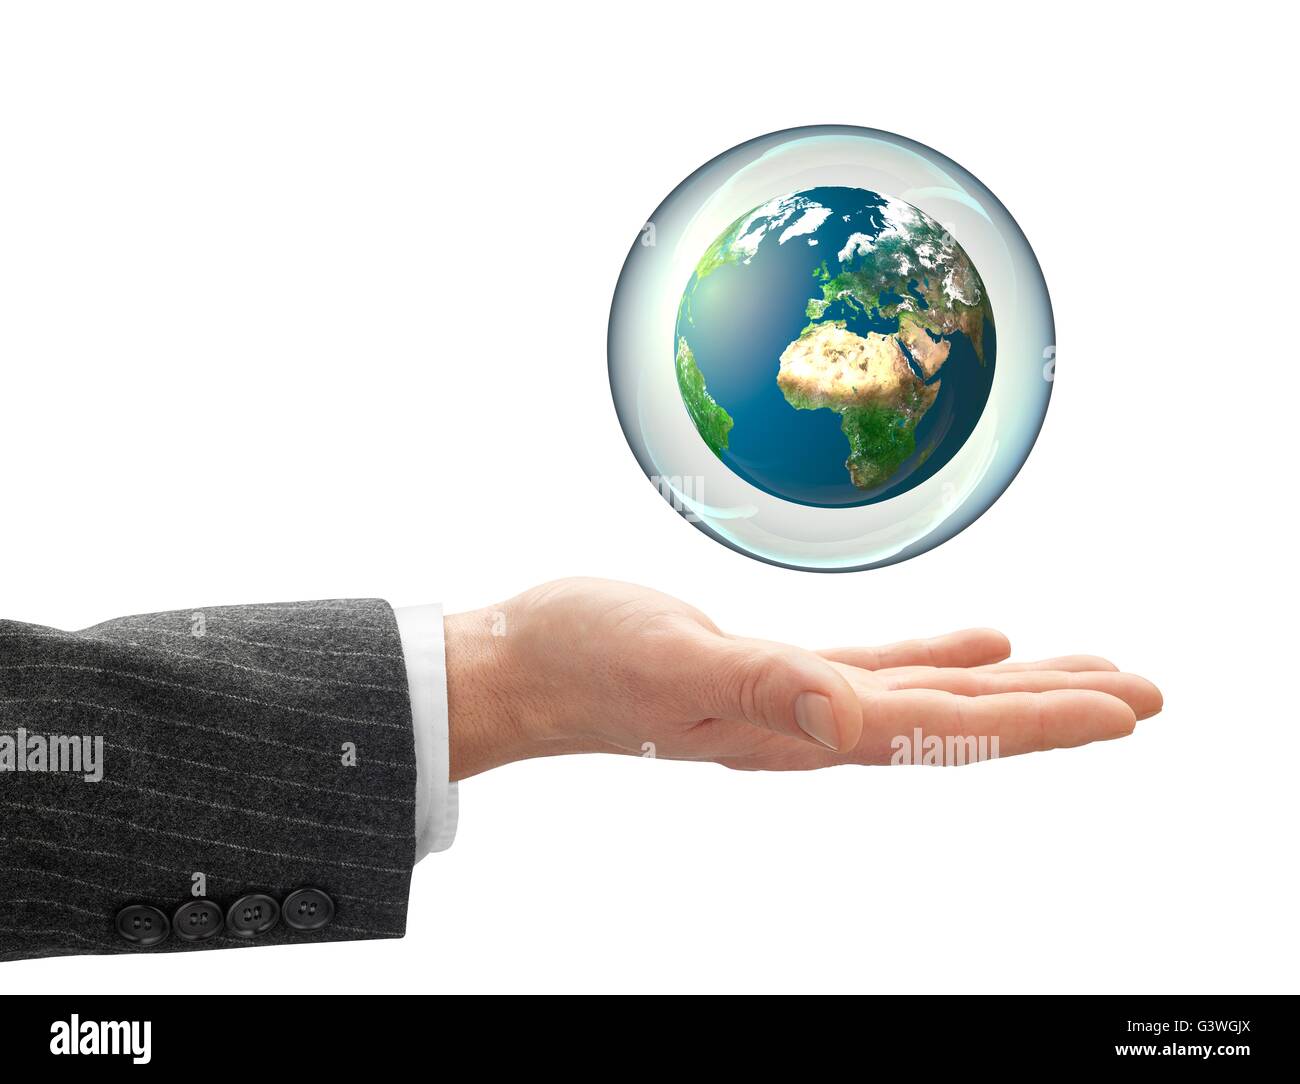 Business Hand Holding Globus in Bubble-Erde-Textur-Maps mit freundlicher Genehmigung von NASA Visible Earth Project. http://visibleearth.NASA.gov Stockfoto